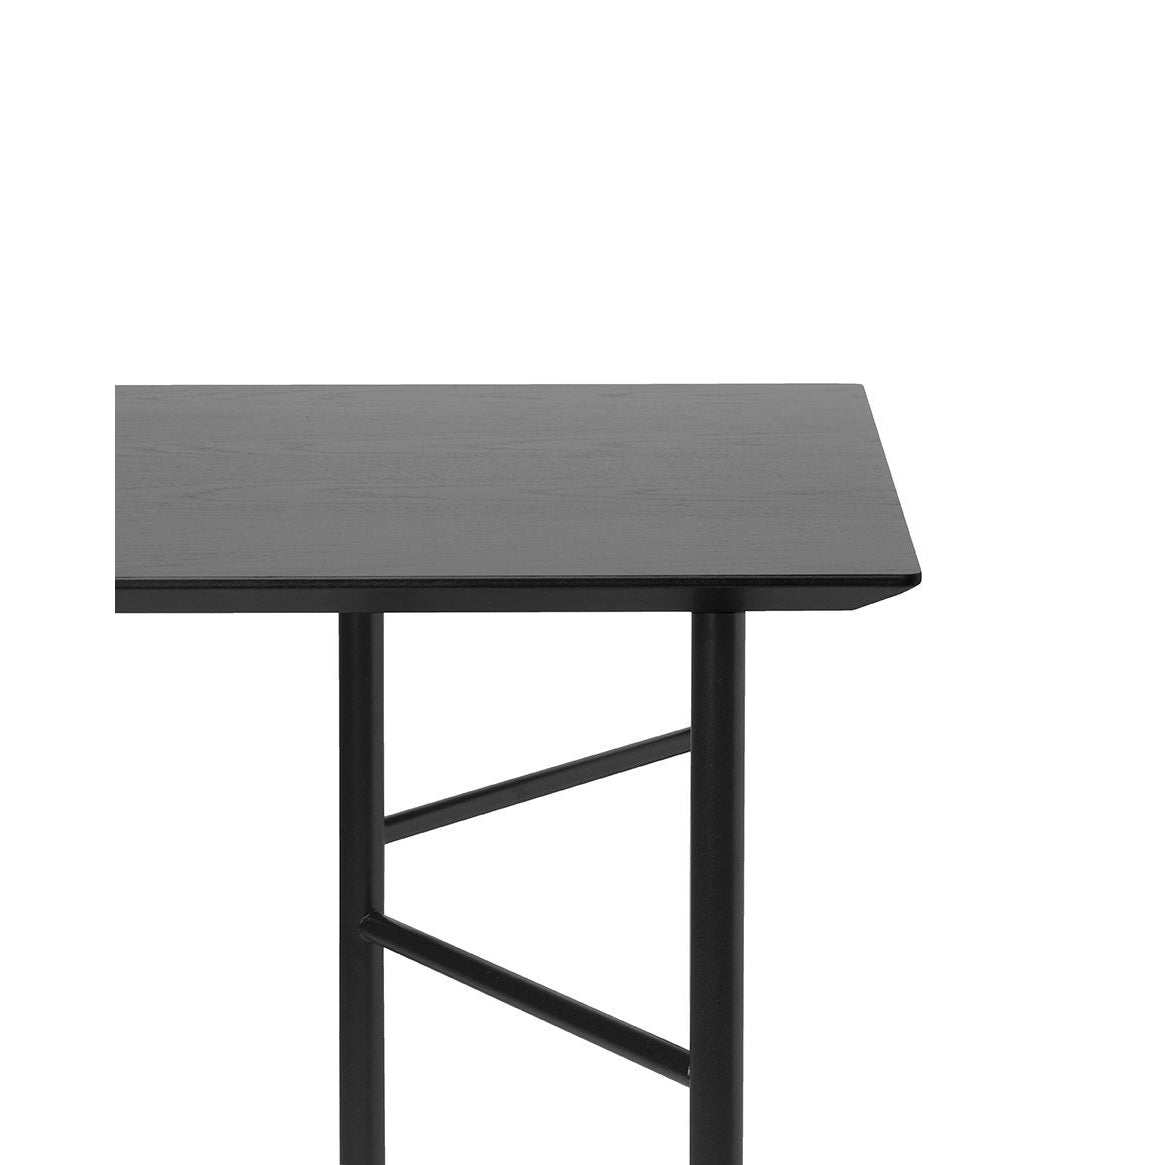 Ferm Living Milfle Desk Top 135 cm, černá dubová dýha